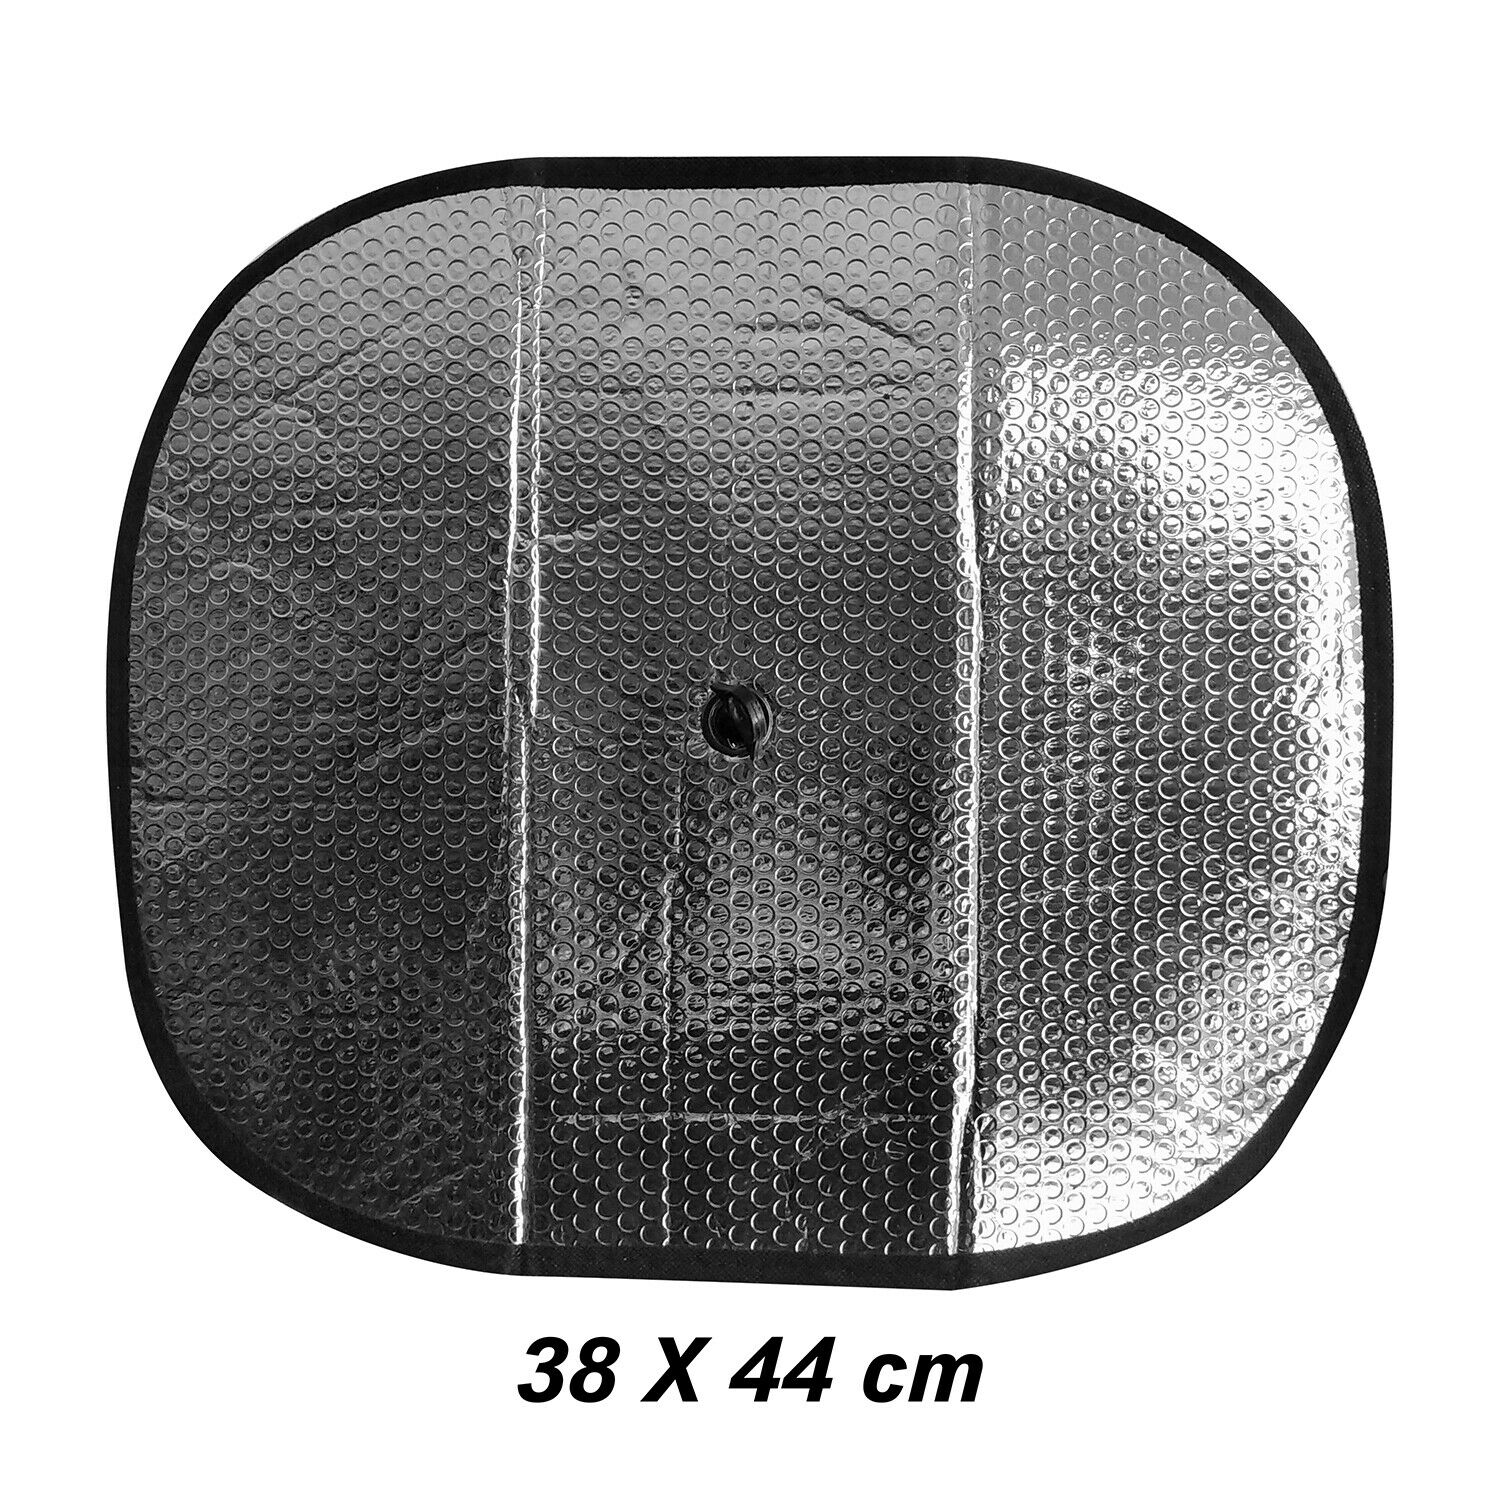 Parasol De Coche Lateral Reflectante Plegable Protector Cortinilla Tamaño  44 X38 Cm Molcar